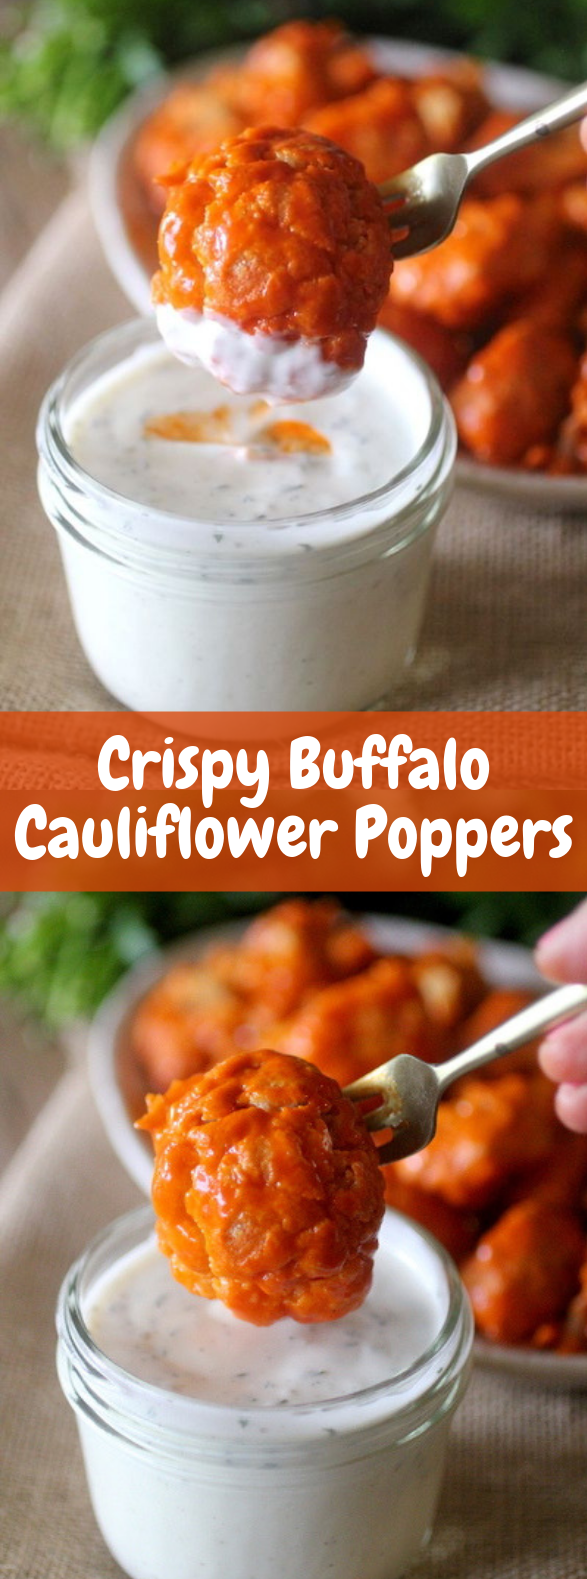 Crispy Buffalo Cauliflower Poppers #Vegetarian #Lunch